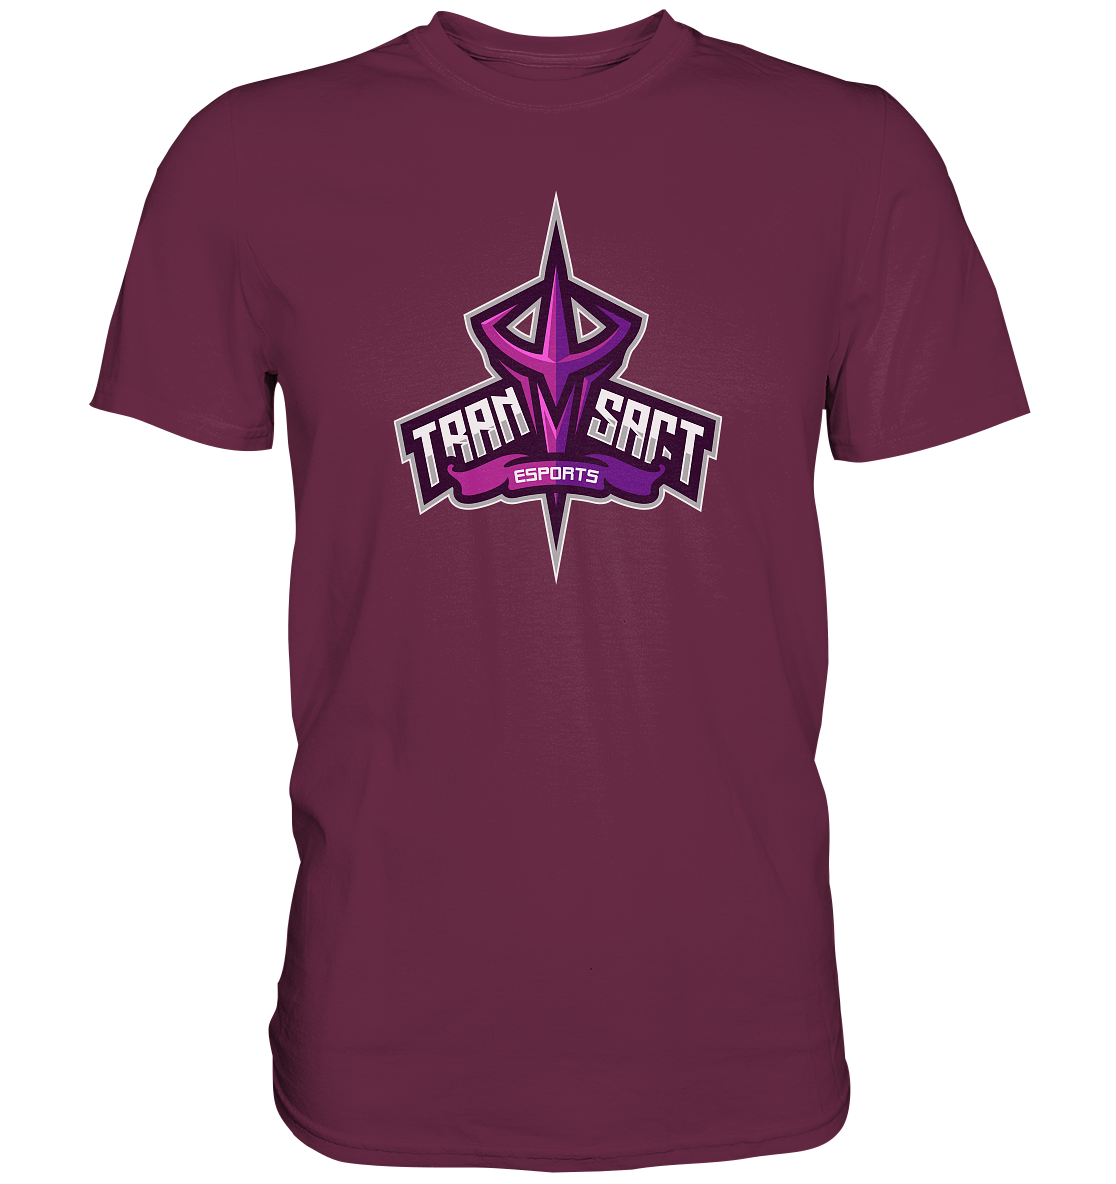 TRANSACT ESPORTS - Basic Shirt